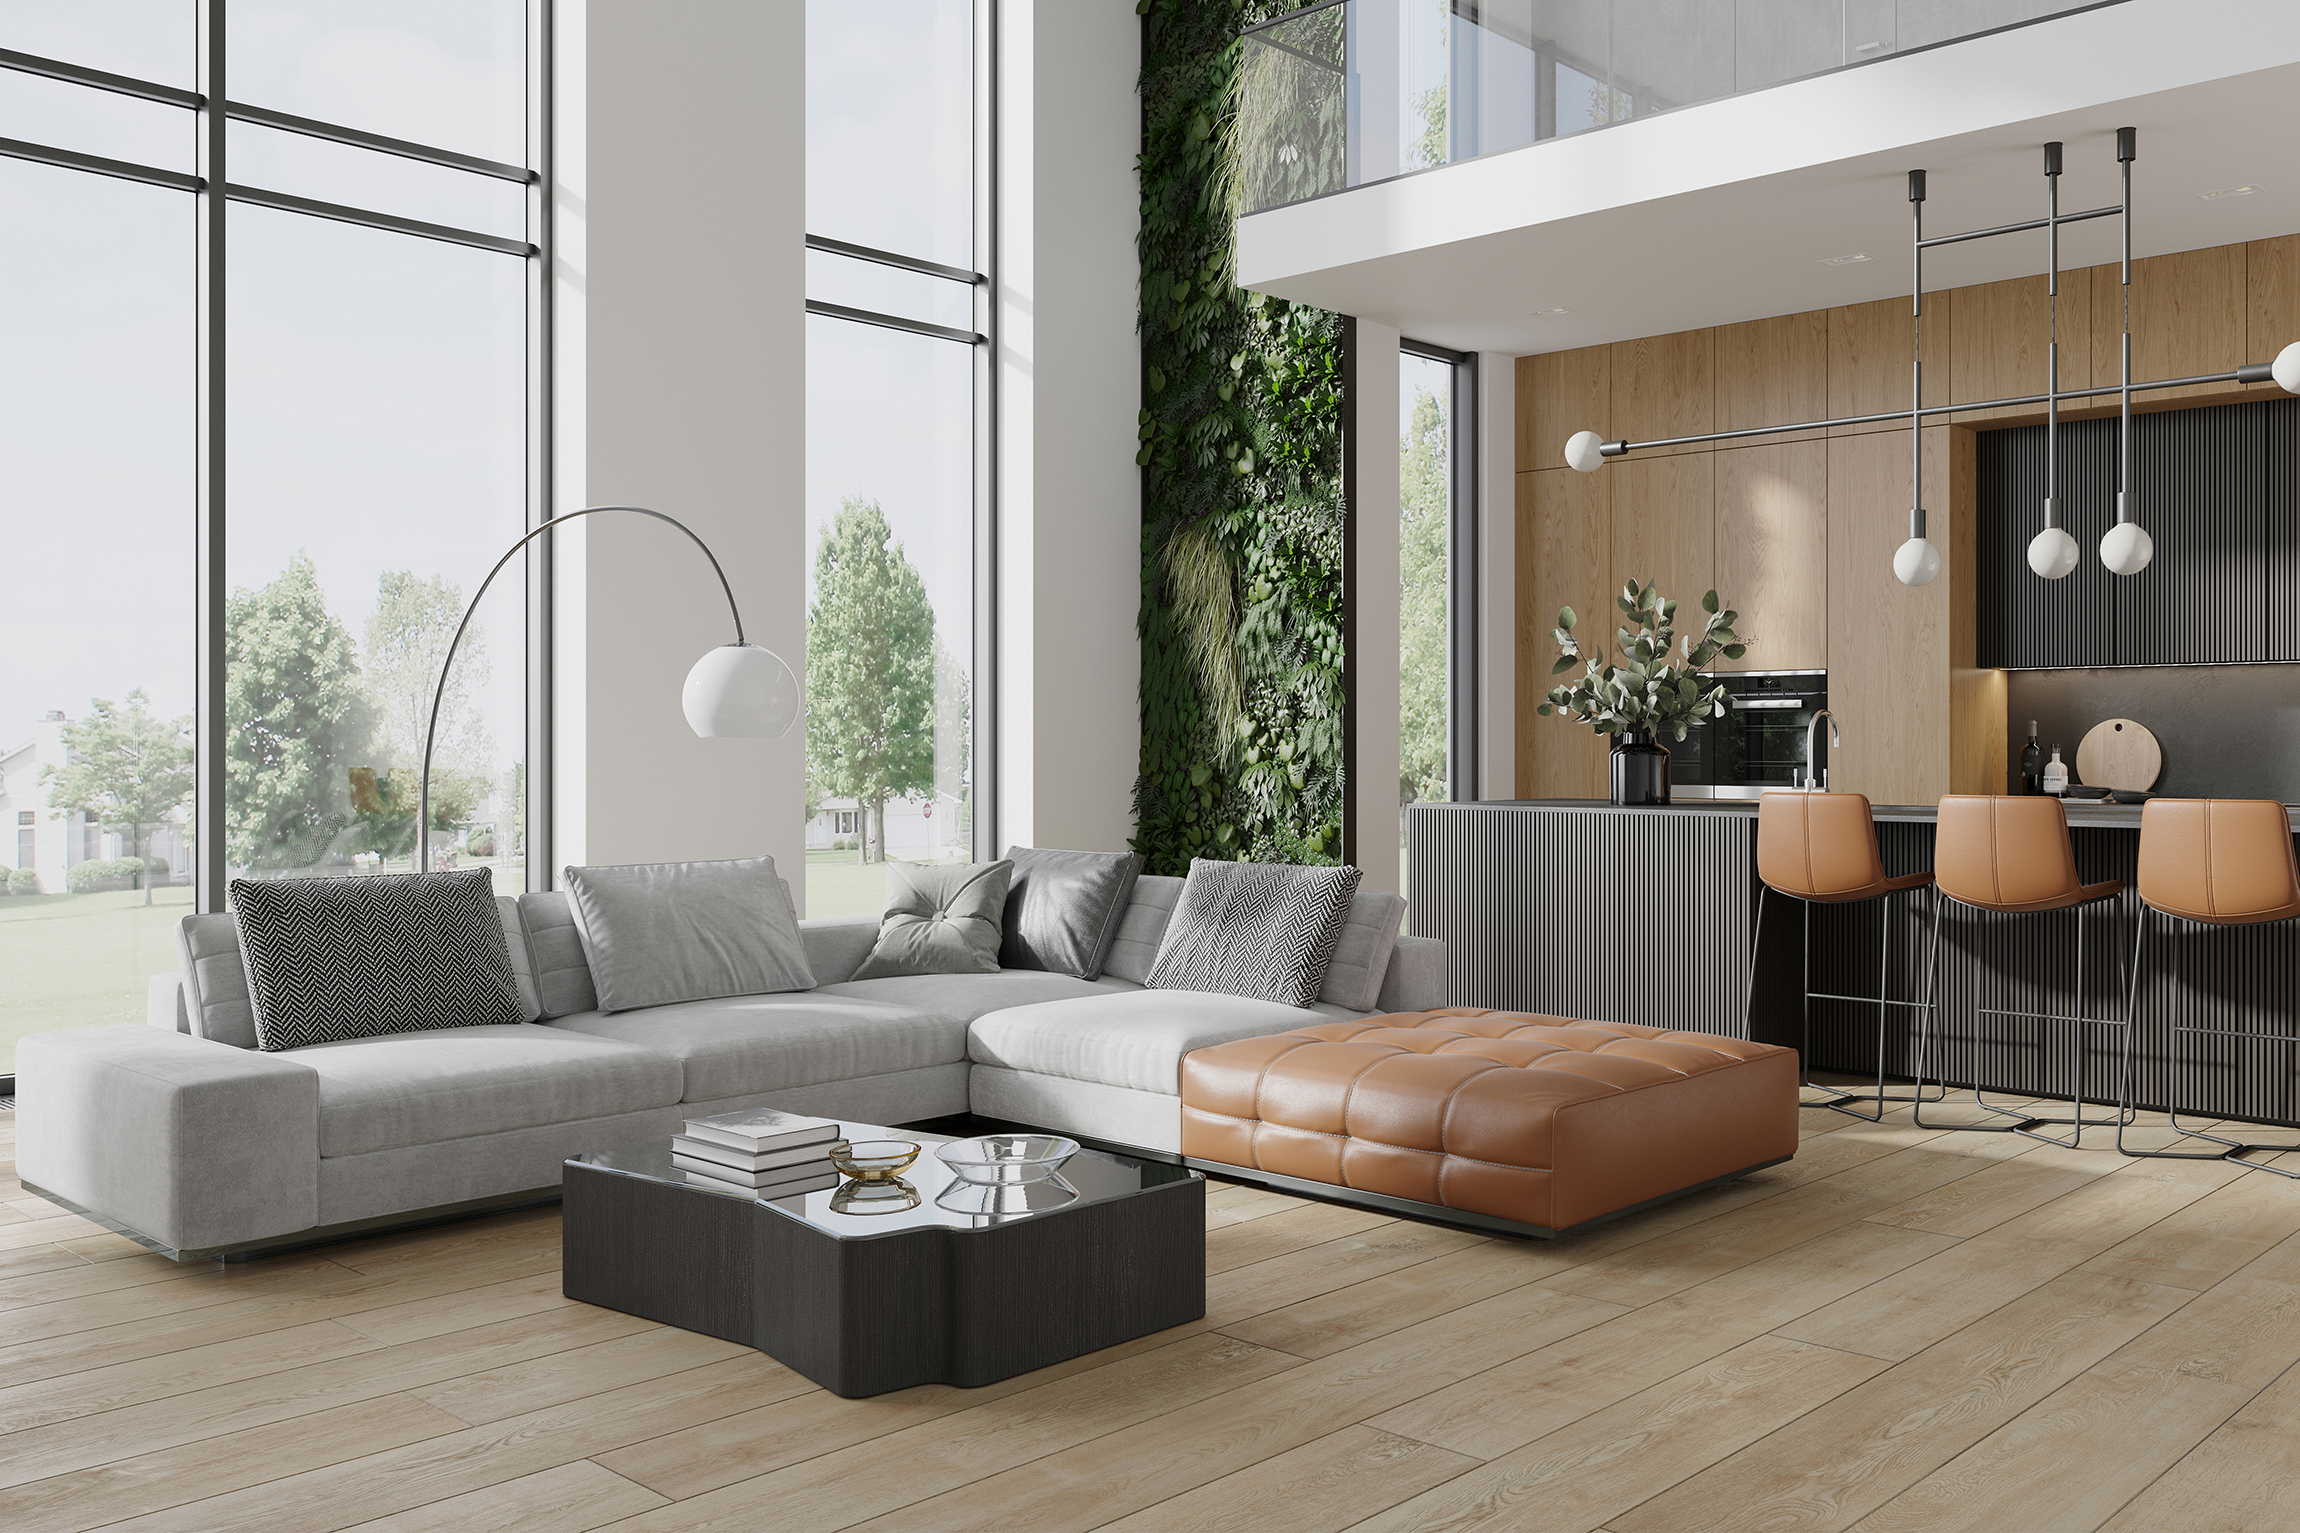 Living Space CG Rendering for Light Wood Floors